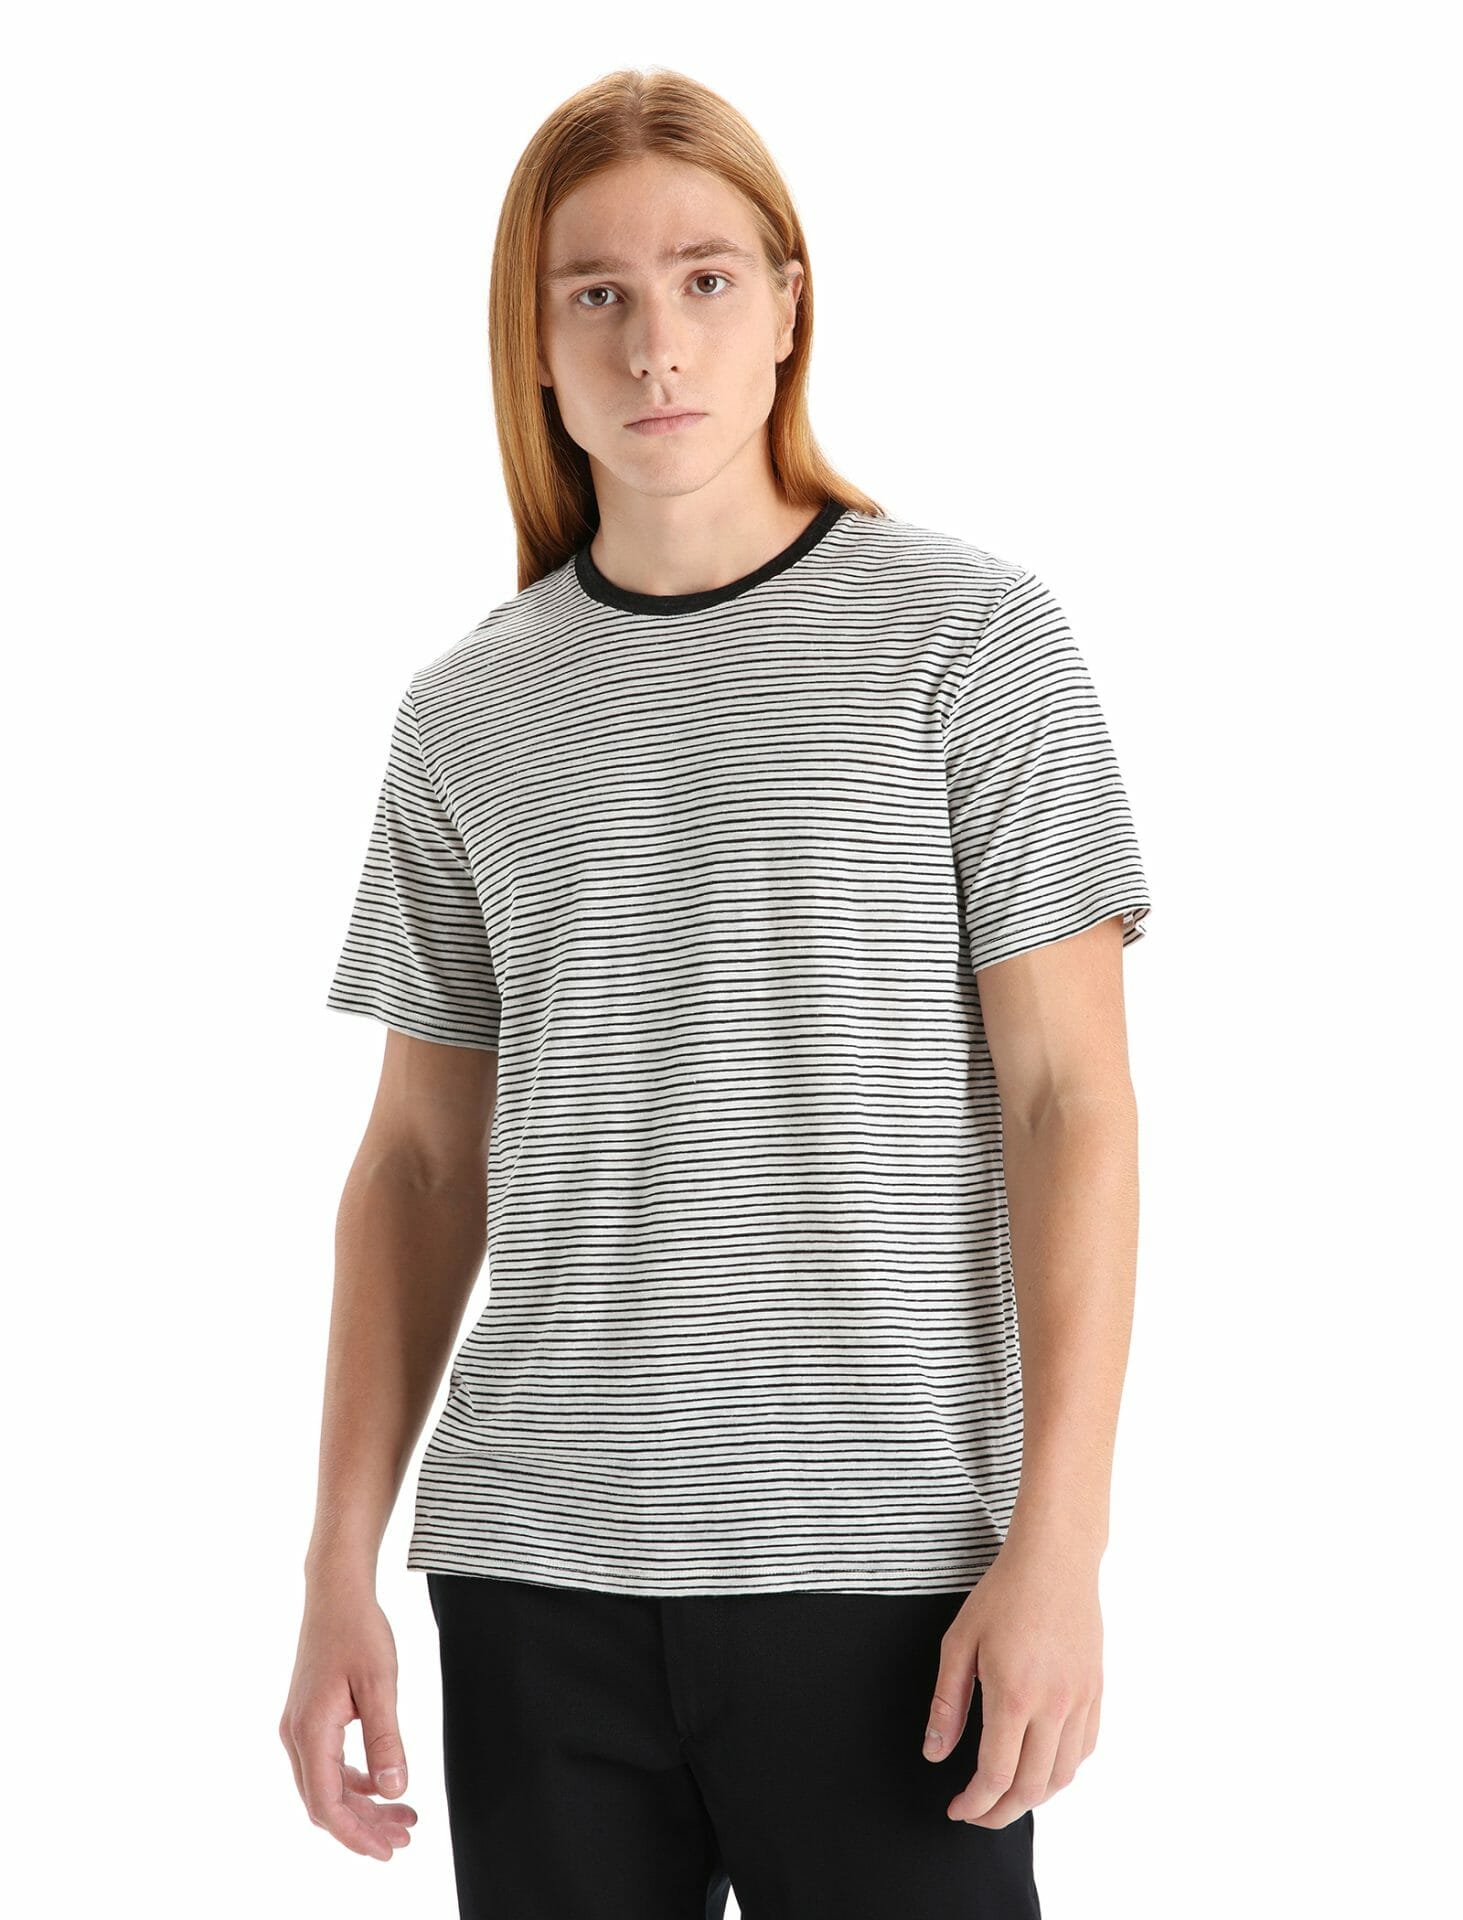 Icebreaker Merino Wool T-Shirt, Men's Short Sleeve T-Shirt